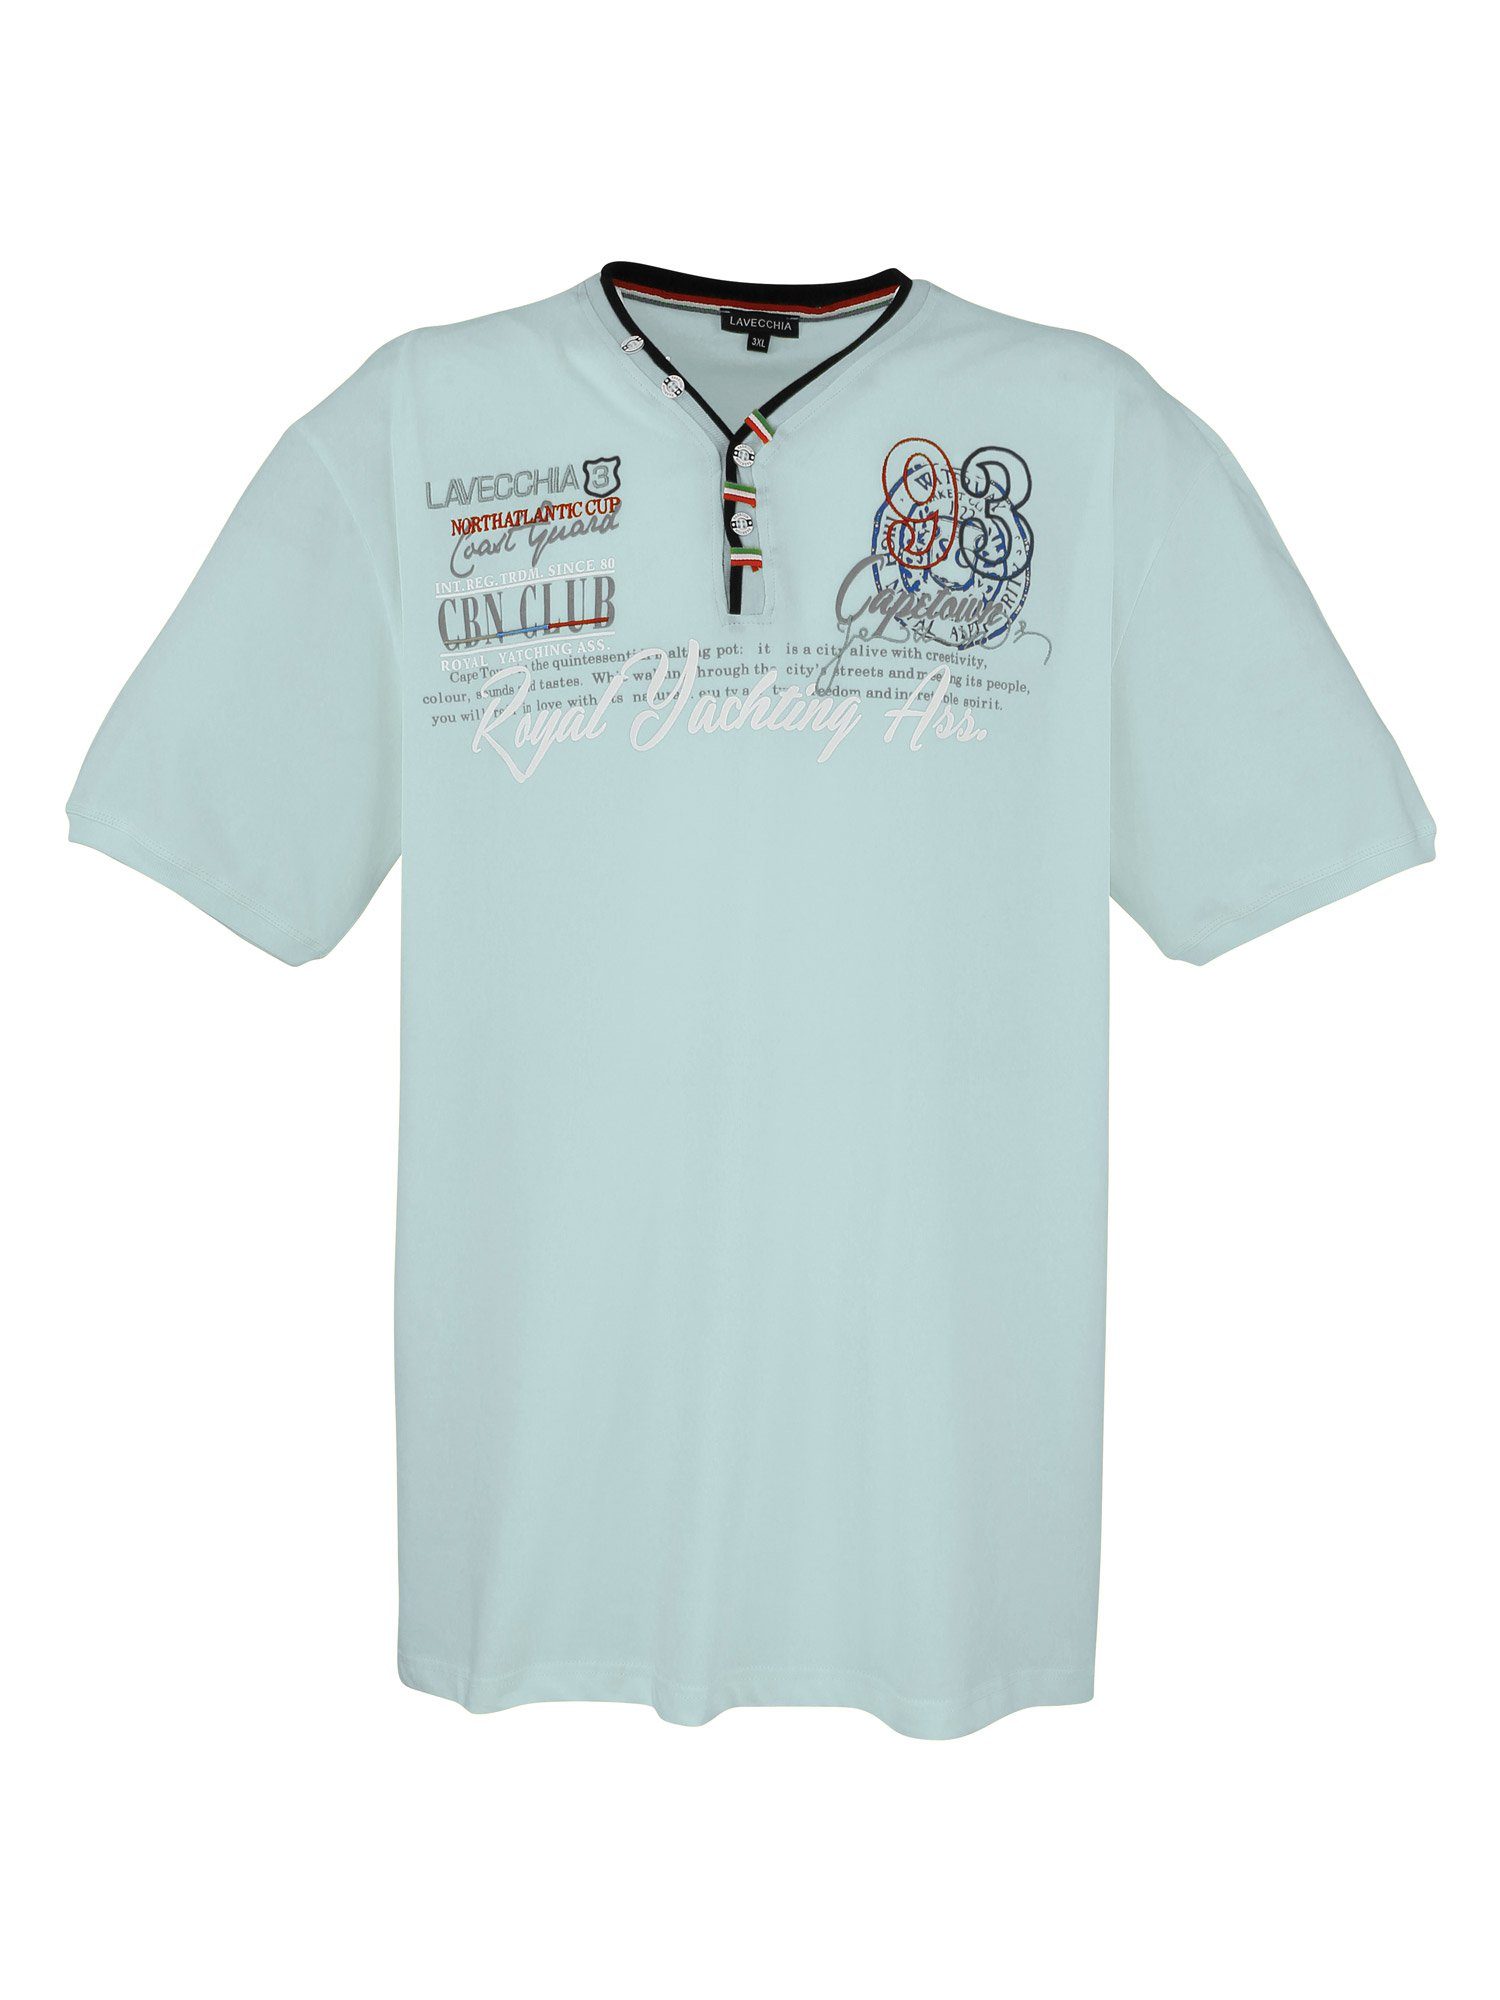 Lavecchia Herrenshirt T-Shirt mint Herren Übergrößen V-Shirt V-Ausschnitt LV-608